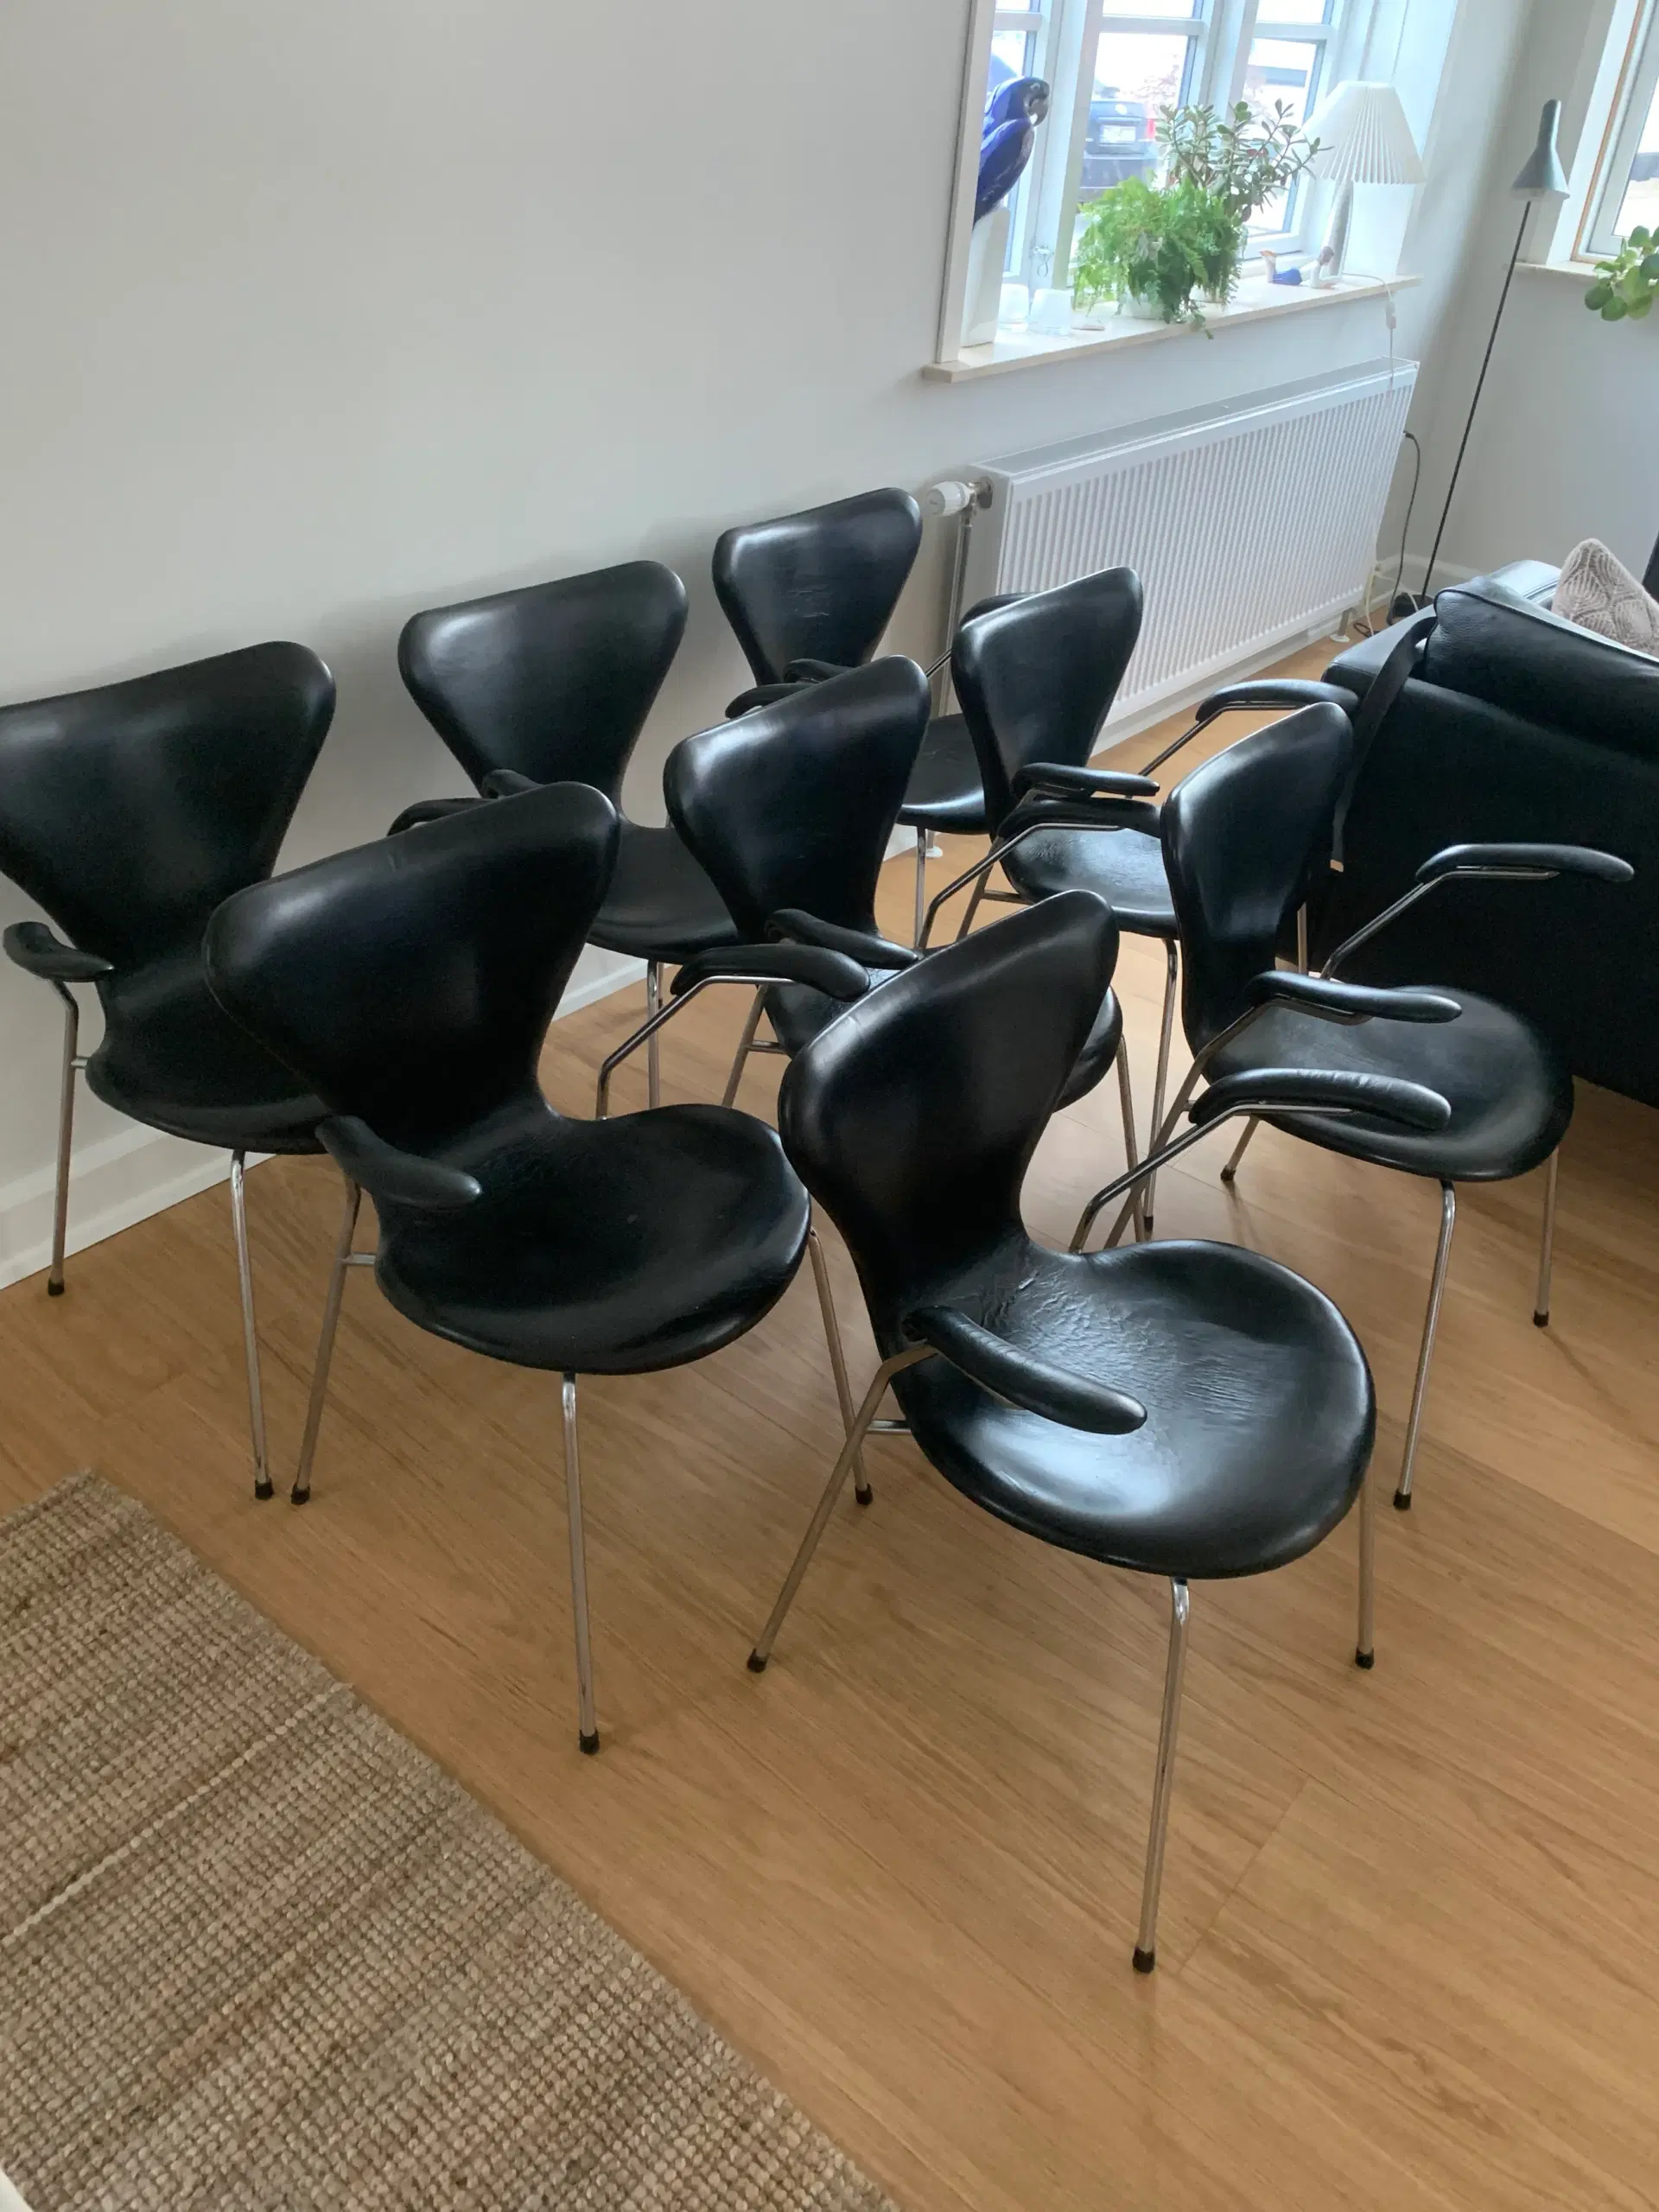 Belønning fungere symptom Syver stol med armlæn | Glejbjerg - GulogGratis.dk